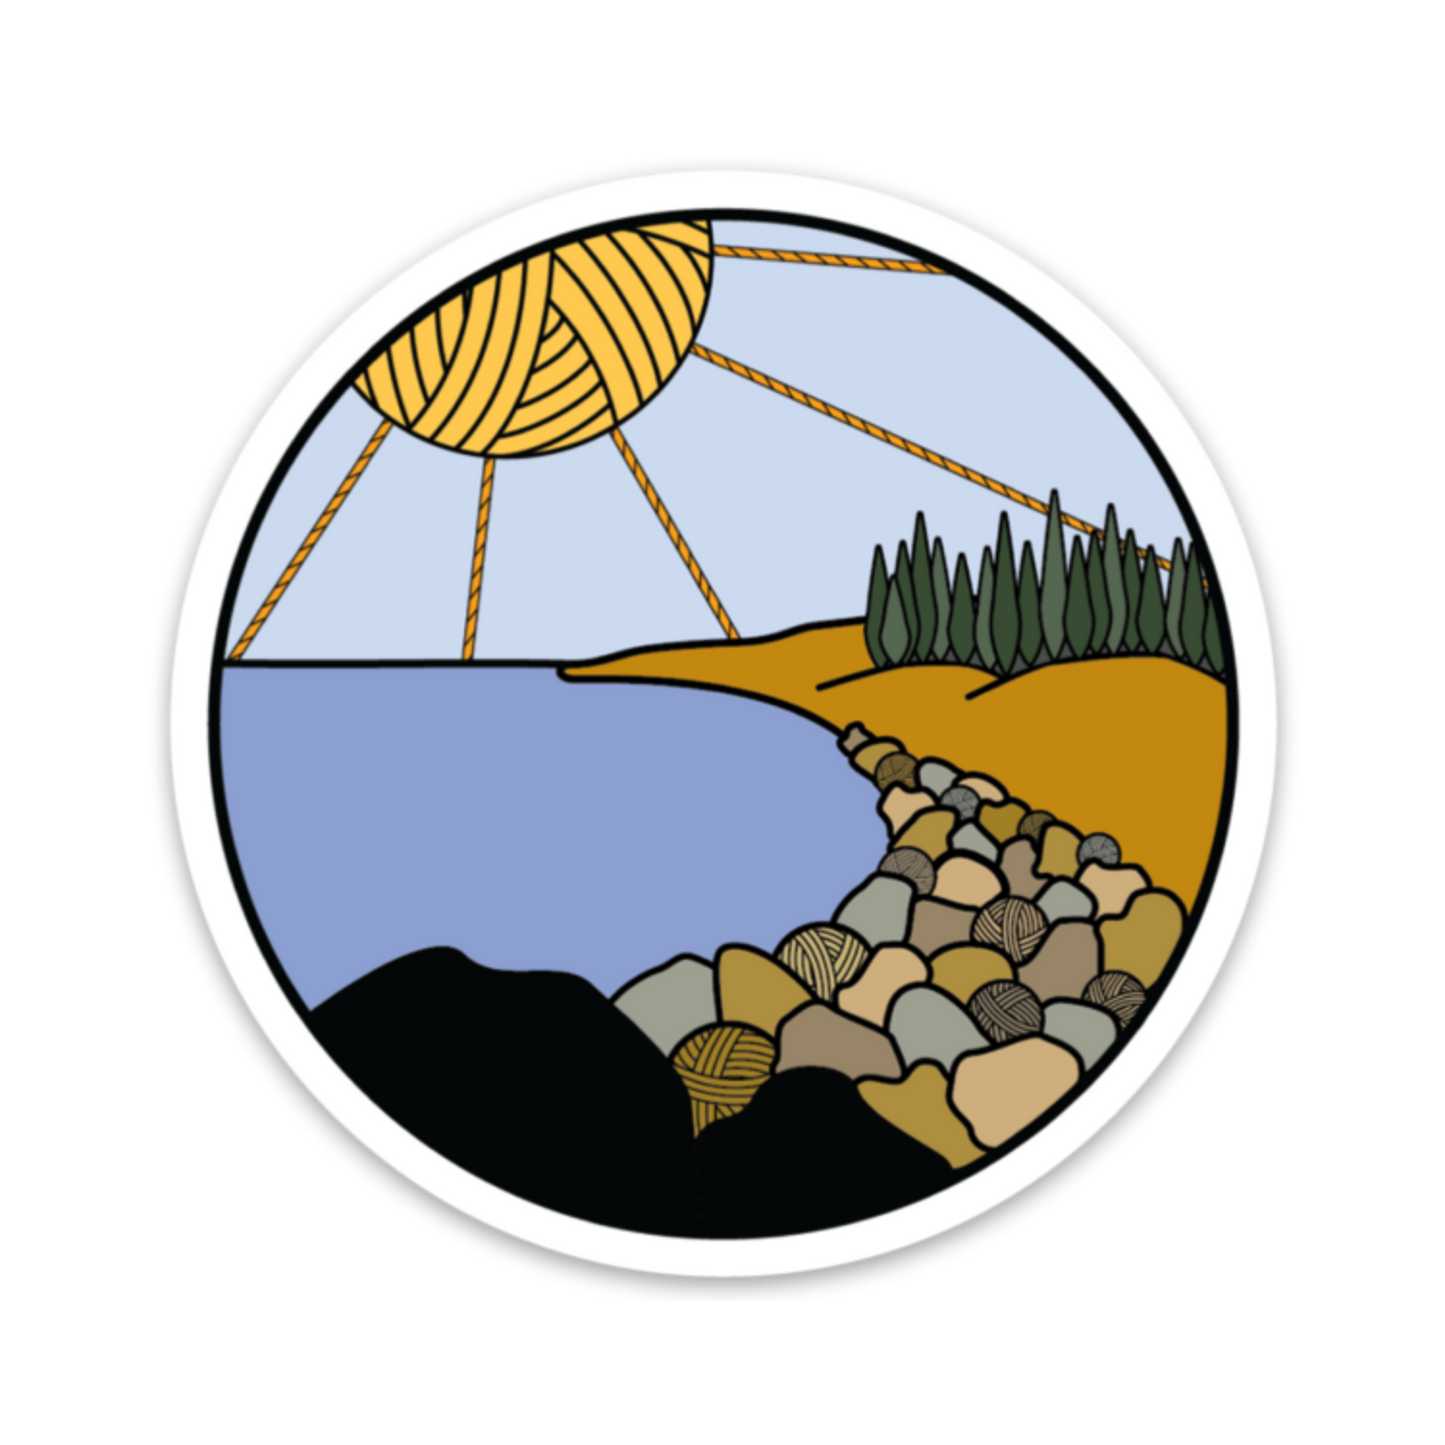 Acadia Knitional Park Sticker